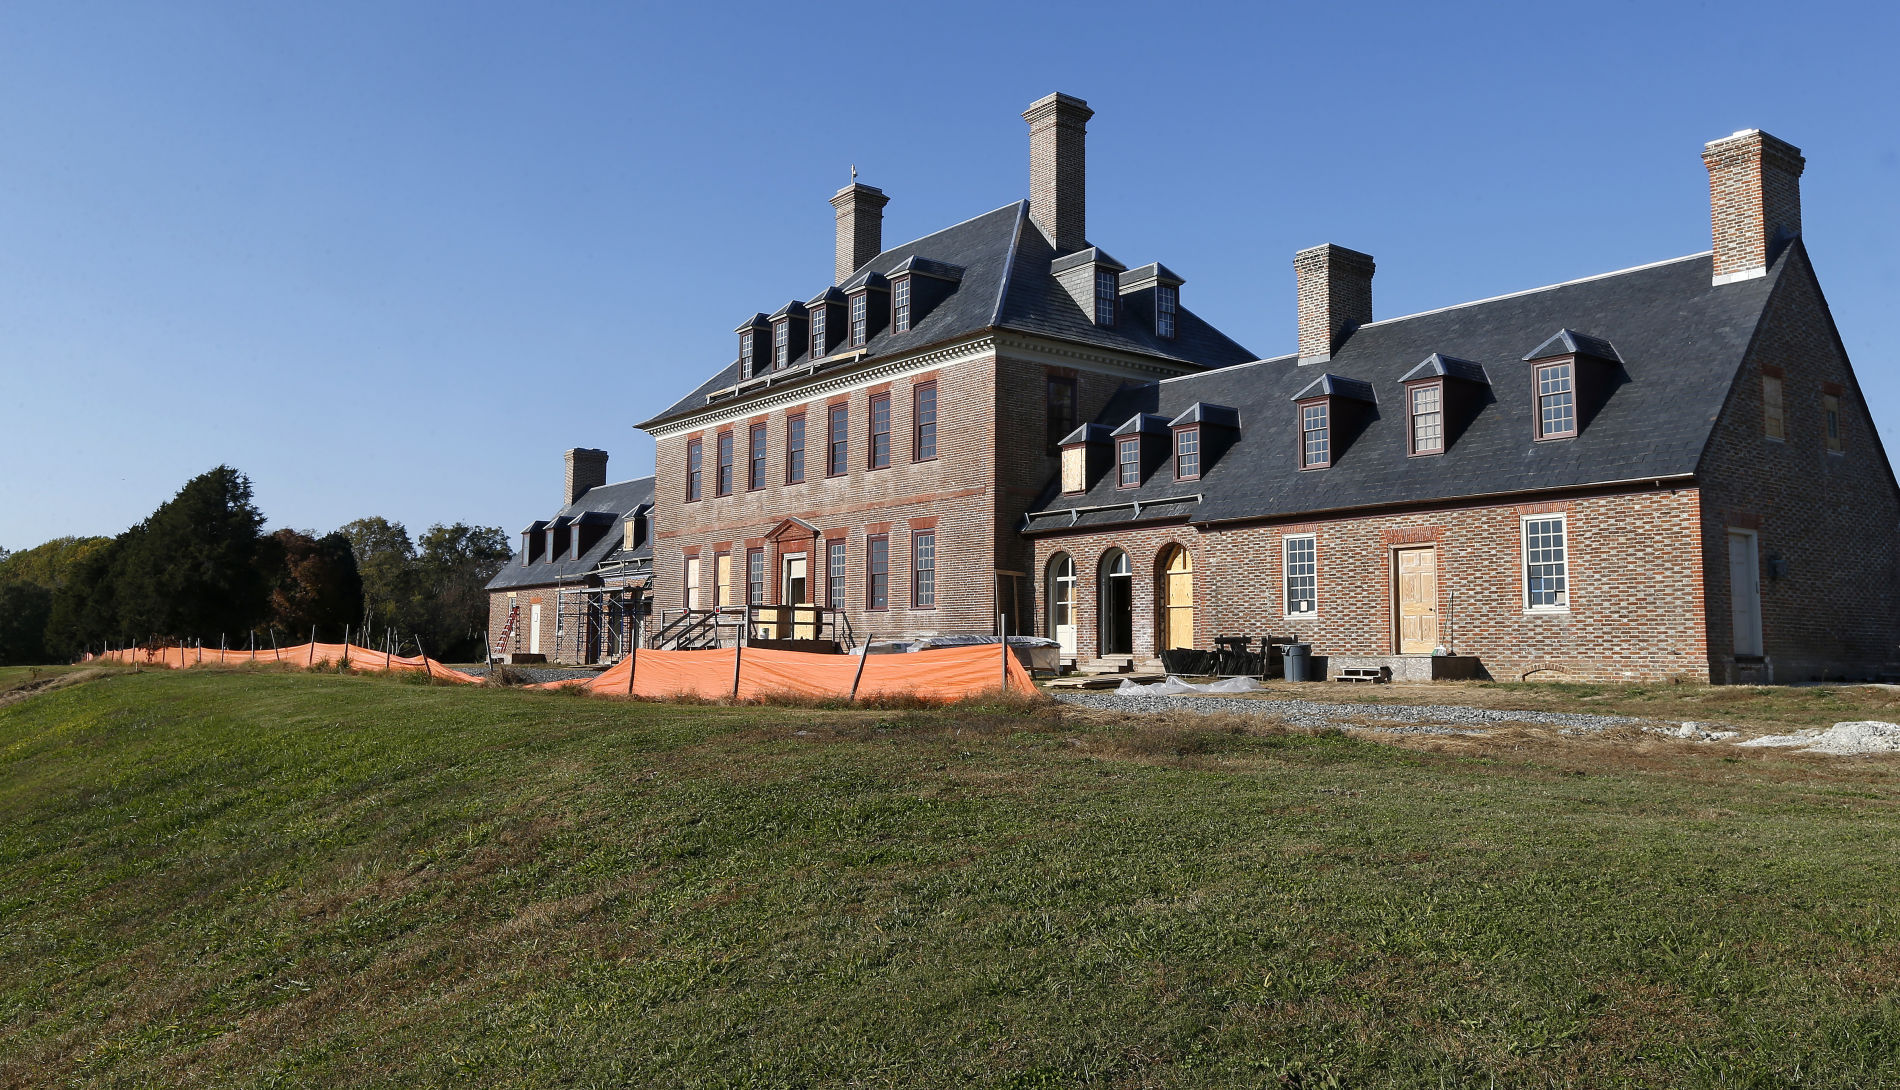 PHOTOS: Restoration work at Carter's Grove Plantation